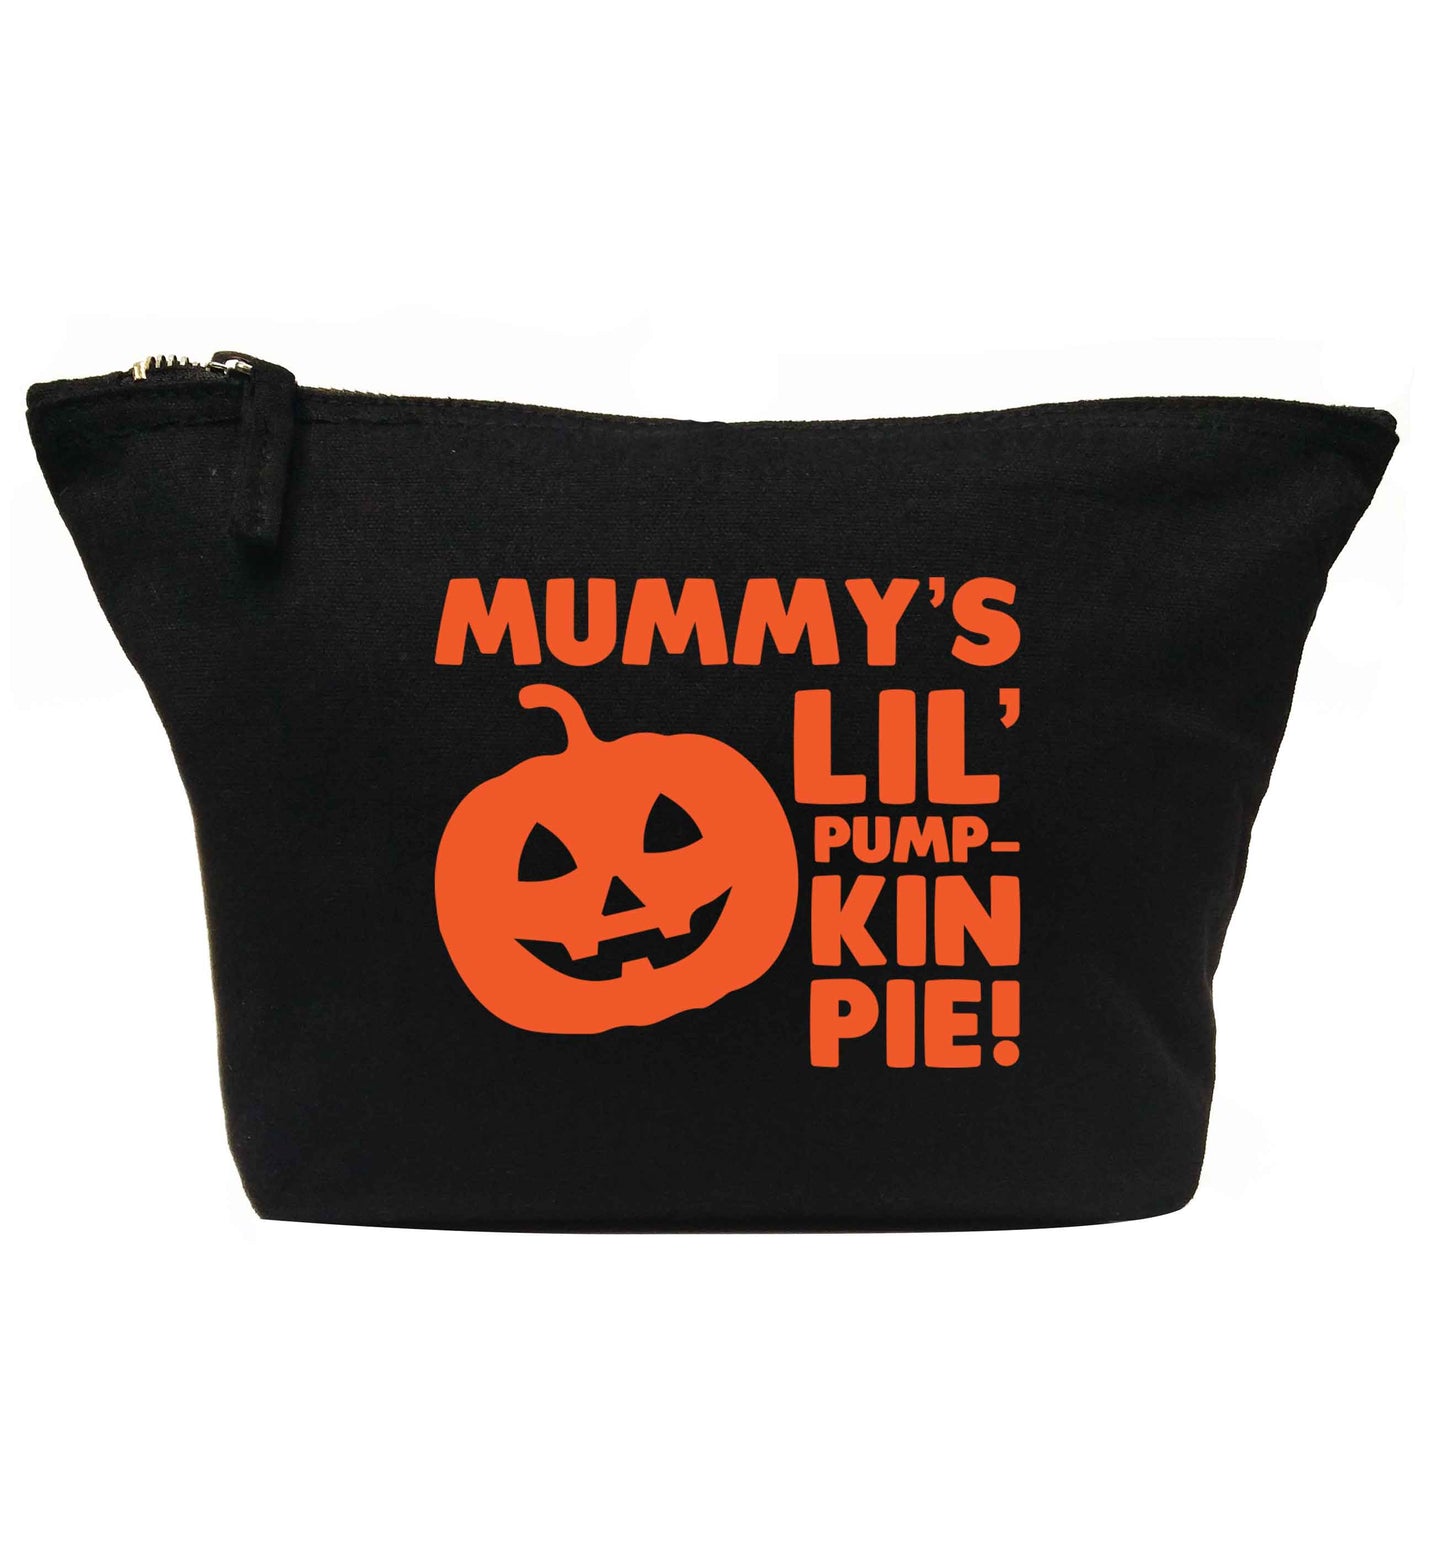 Mummy's lil' pumpkin pie | Makeup / wash bag